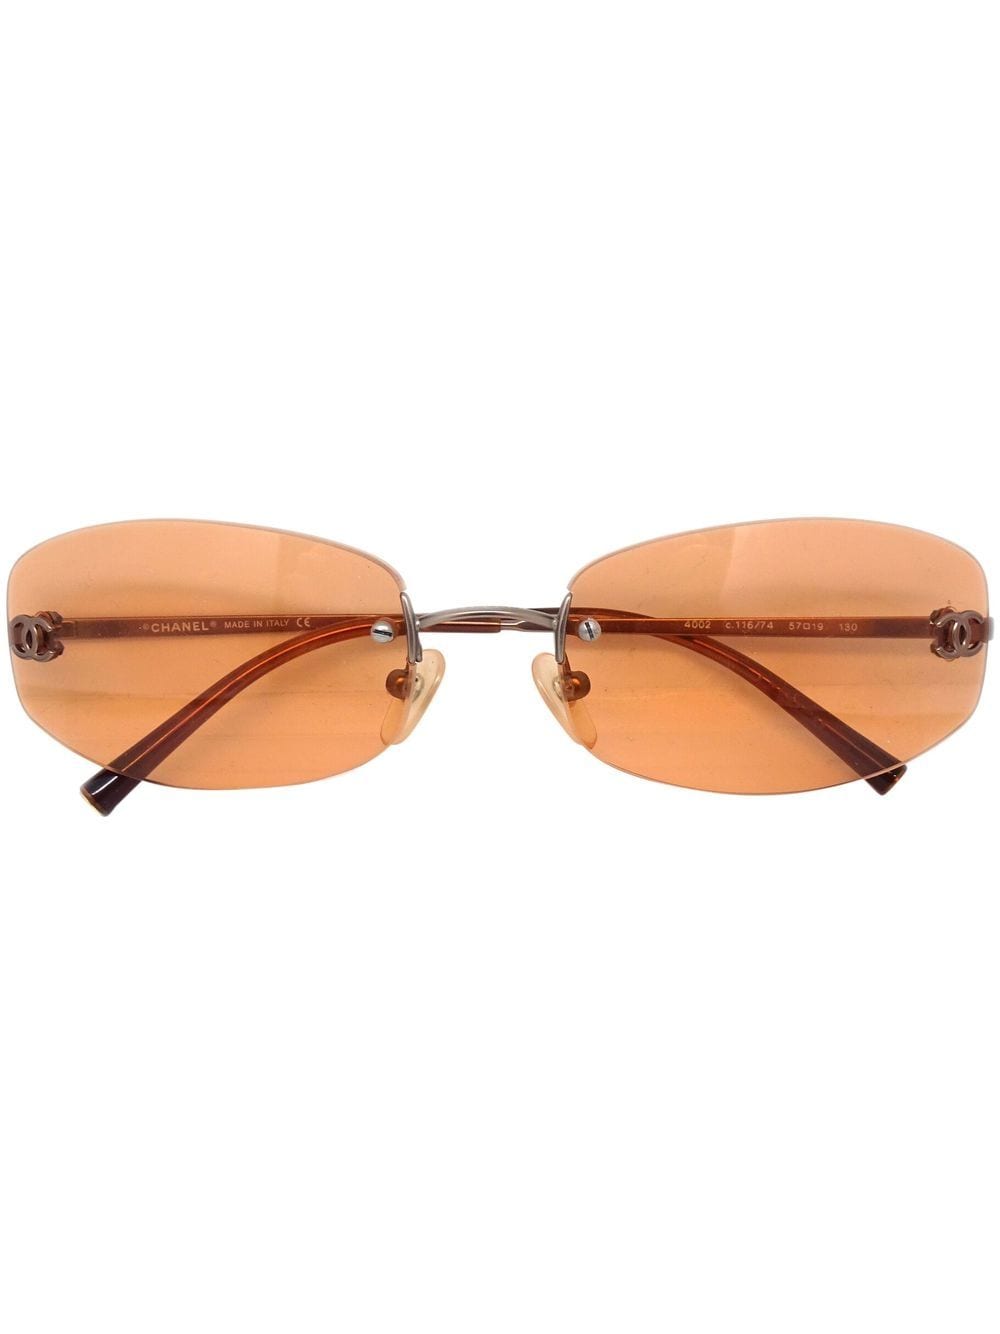 CHANEL Pre-Owned 1990-2000s CC oval sunglasses - Orange